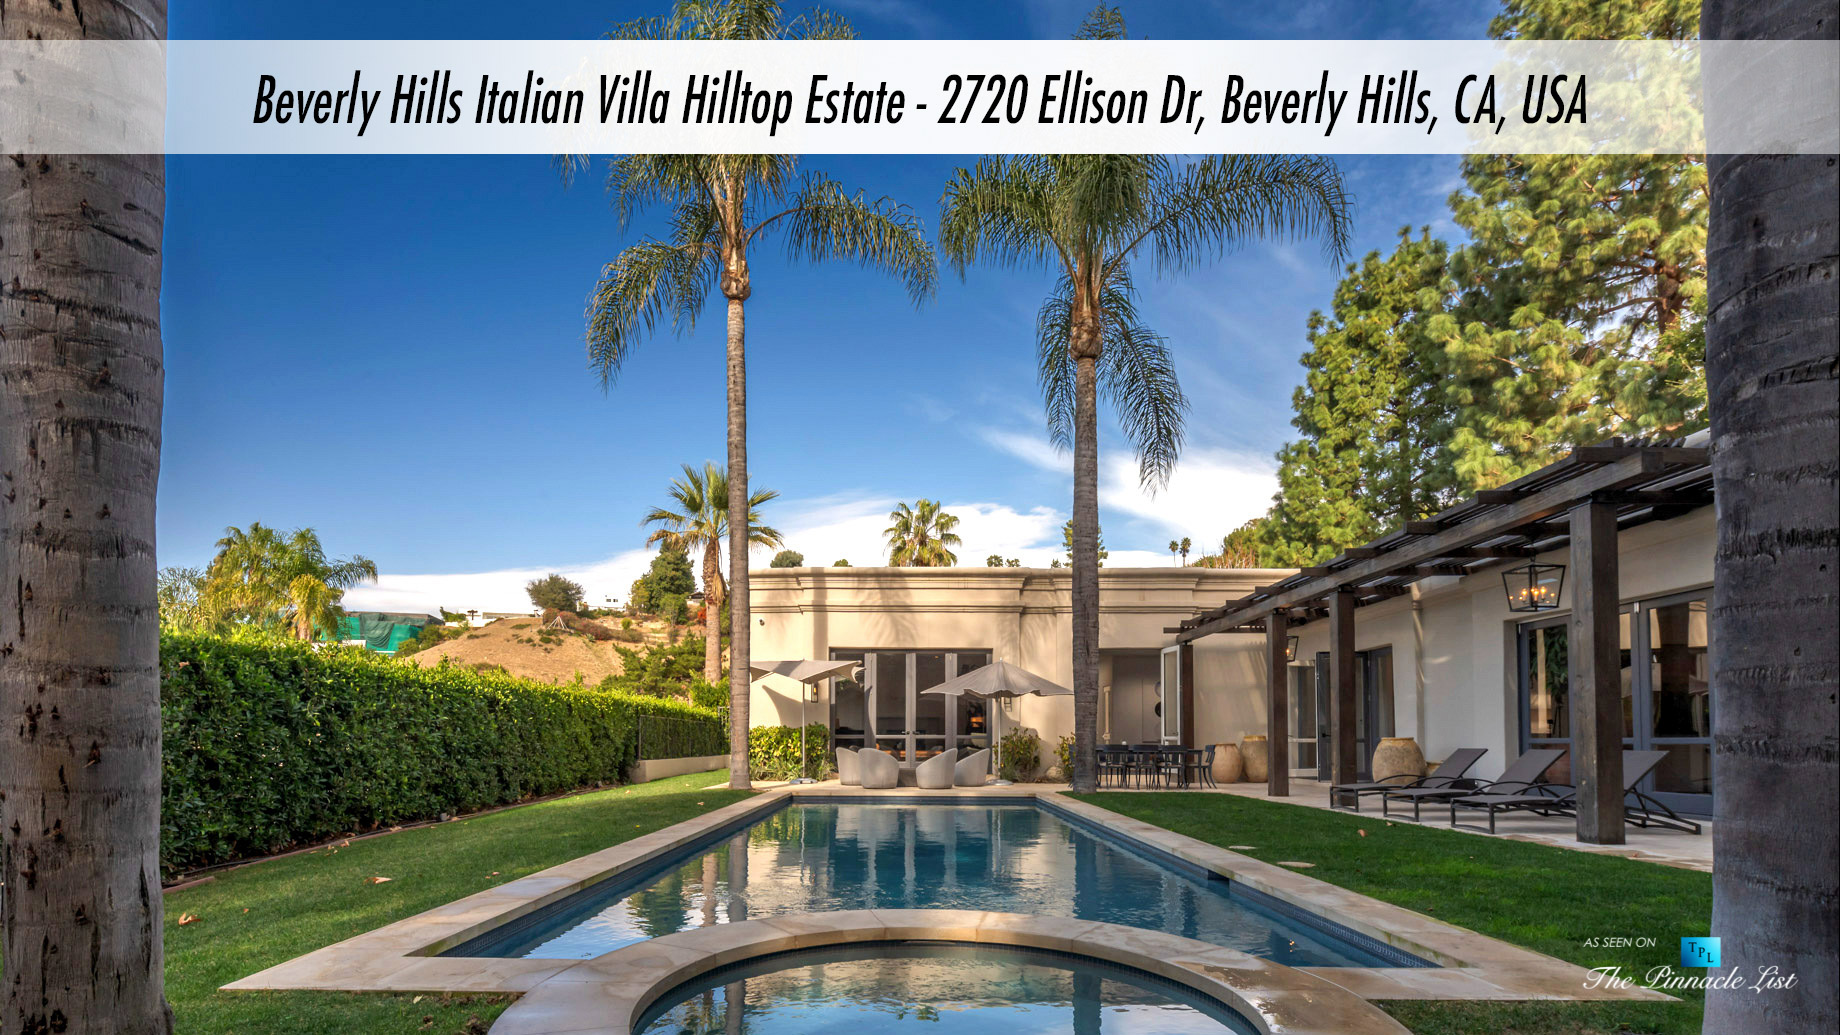 Beverly Hills Italian Villa Hilltop Estate – 2720 Ellison Dr, Beverly Hills, CA, USA